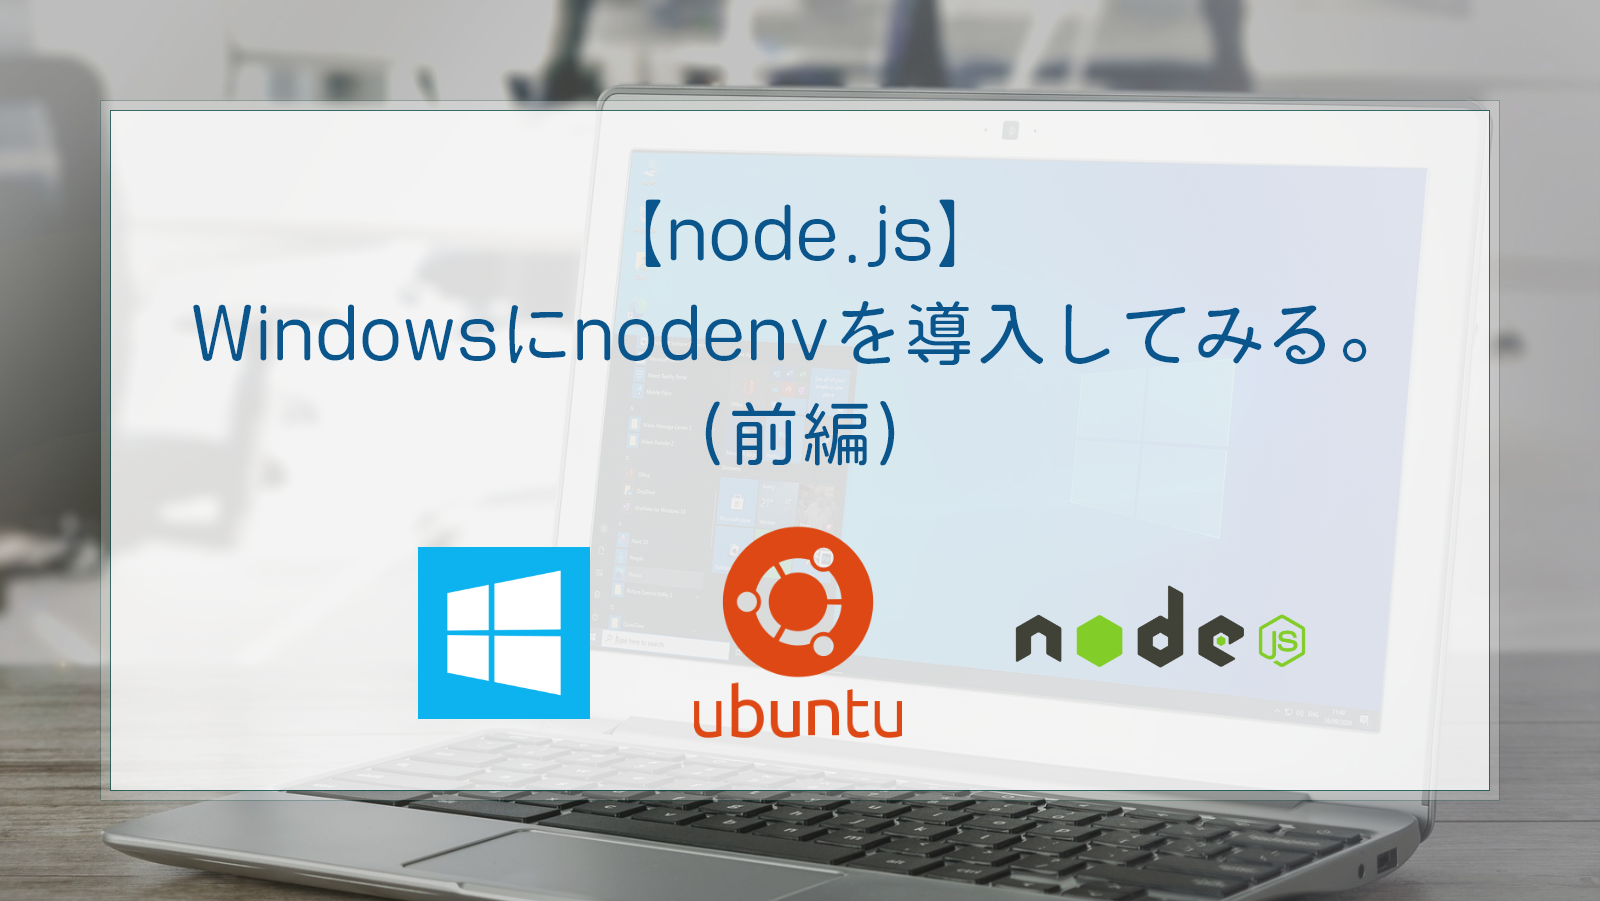 【node.js】Windowsにnodenvを導入してみる。(前編)